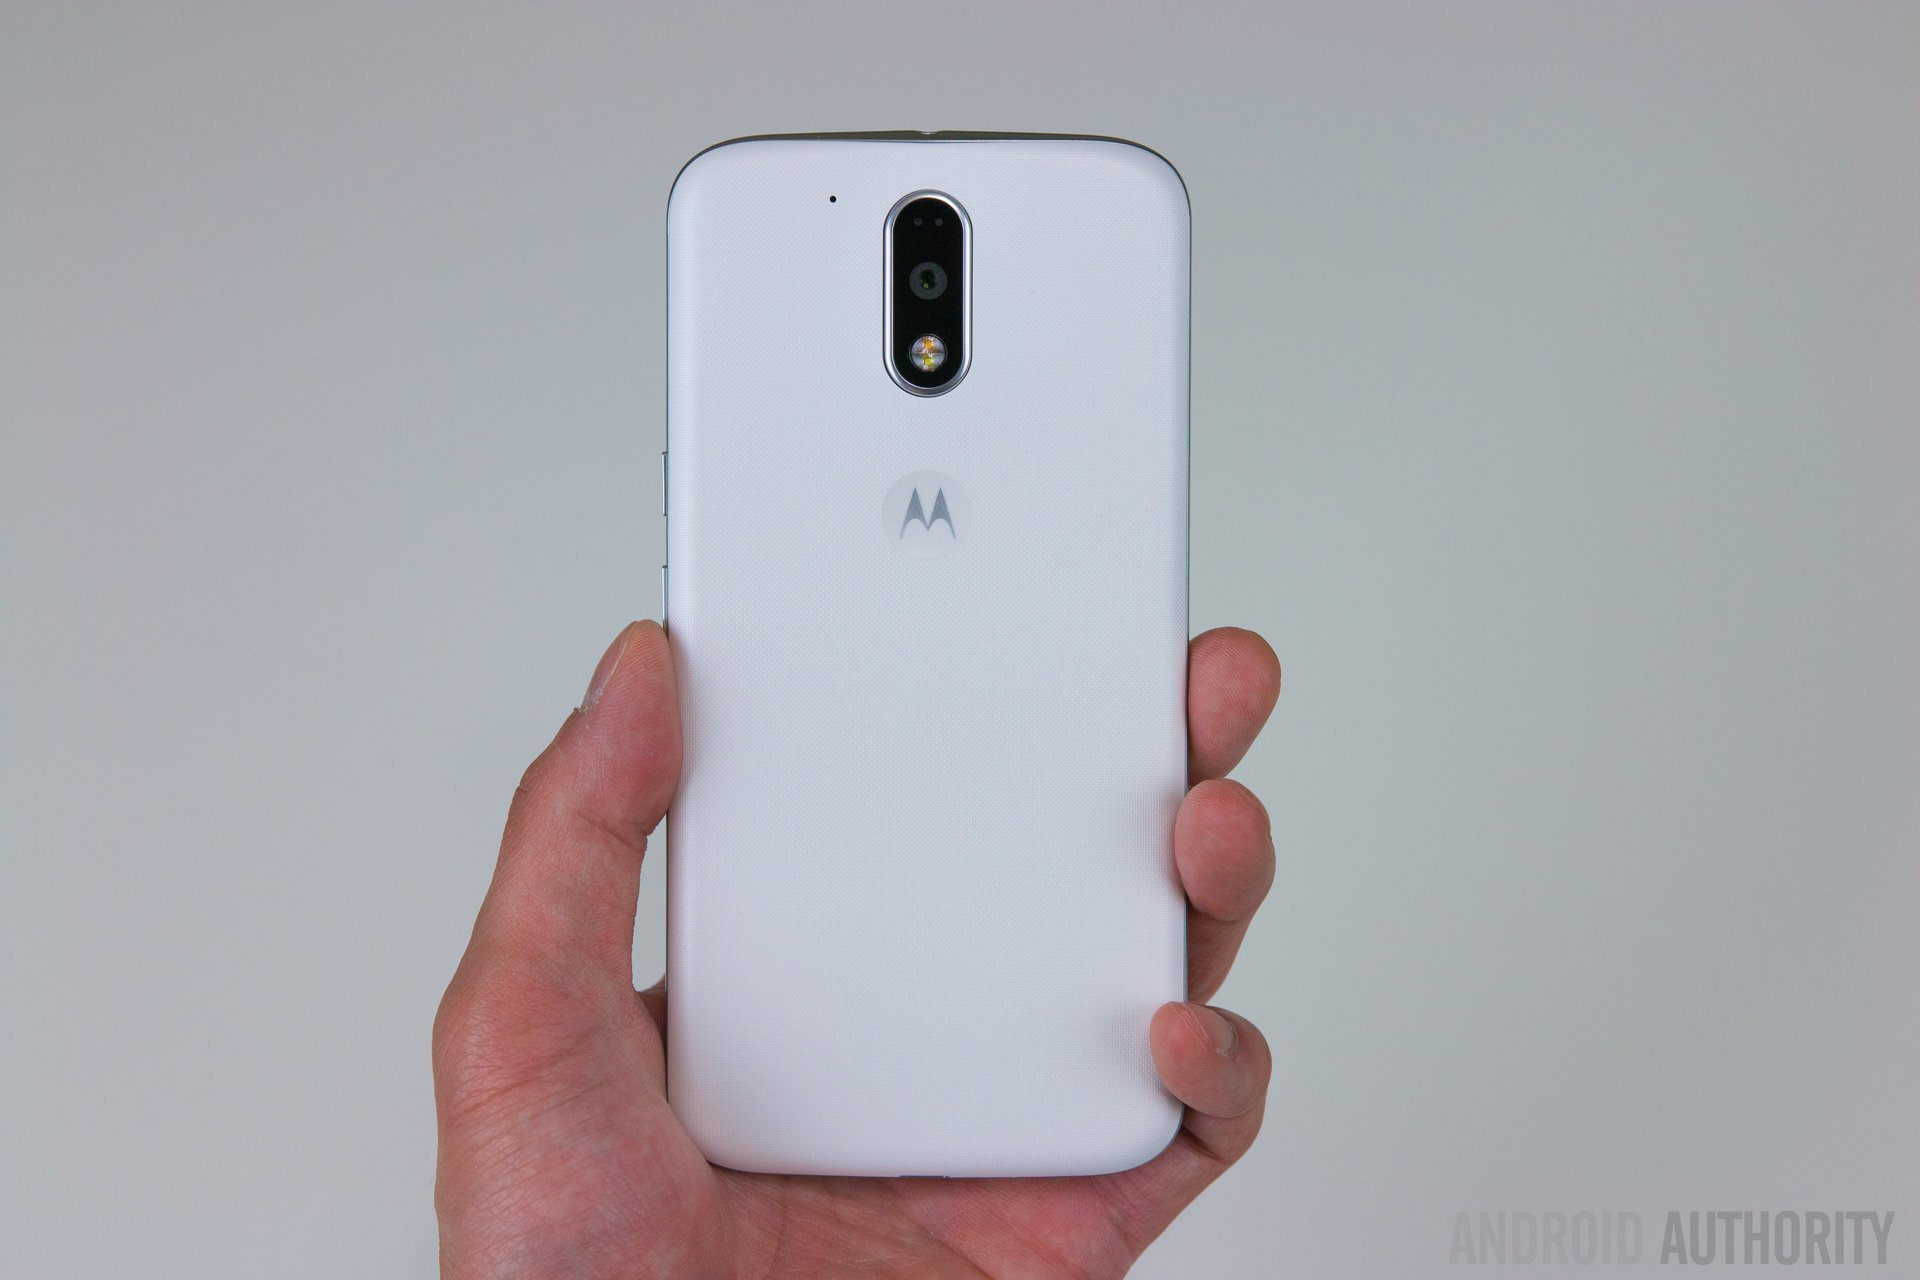 Frugal Extremadamente importante Ambiguo Motorola Moto G4 Plus review - Android Authority